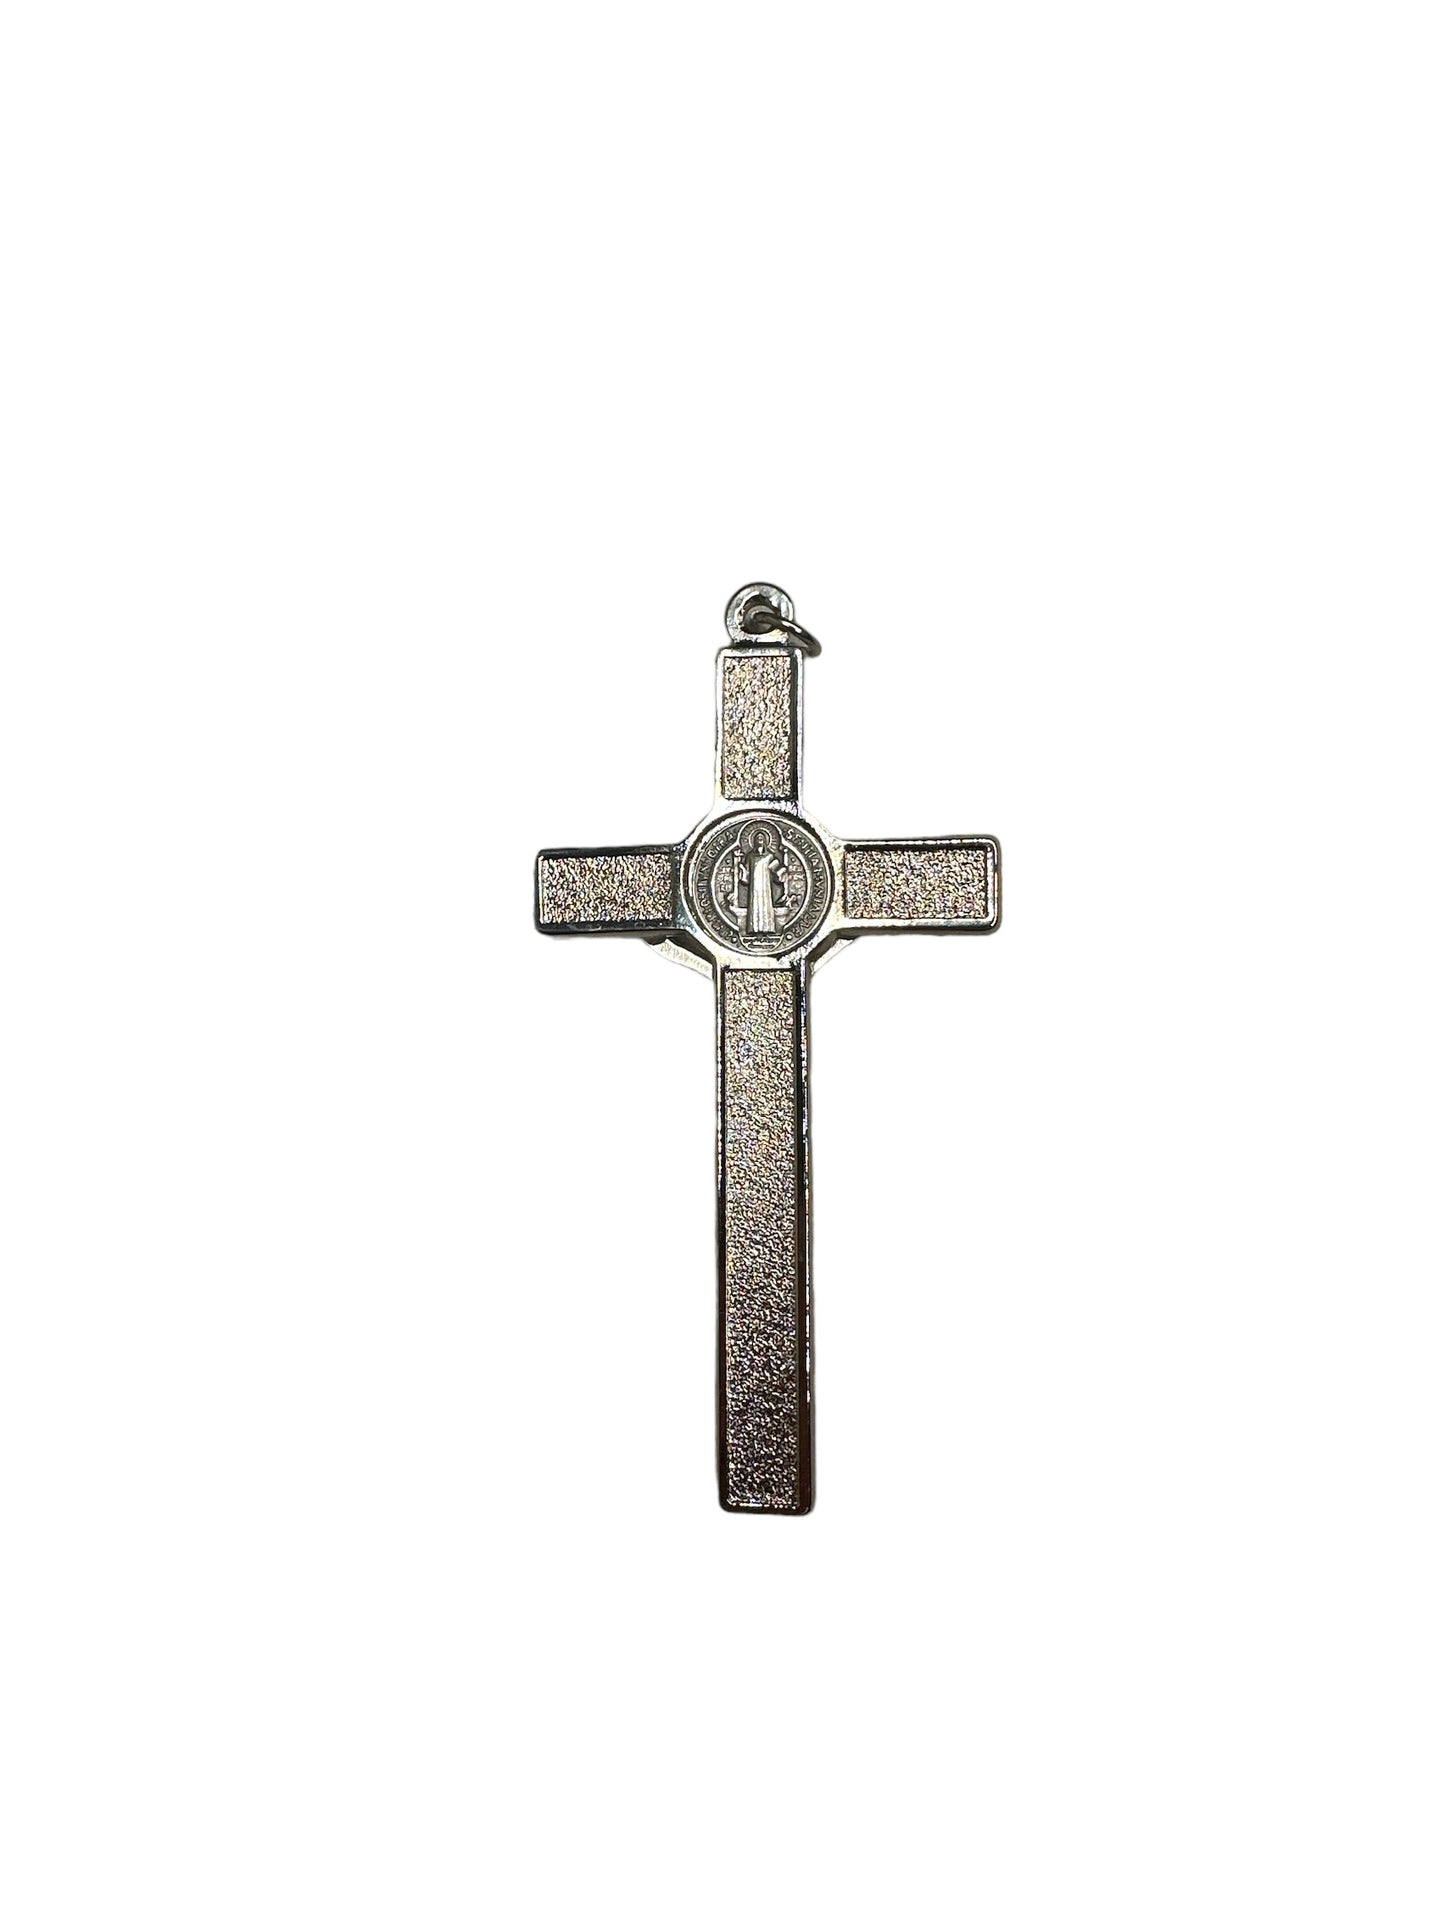 Crucifijo de San Benito Plata/Color Negro/4.5 pulgadas